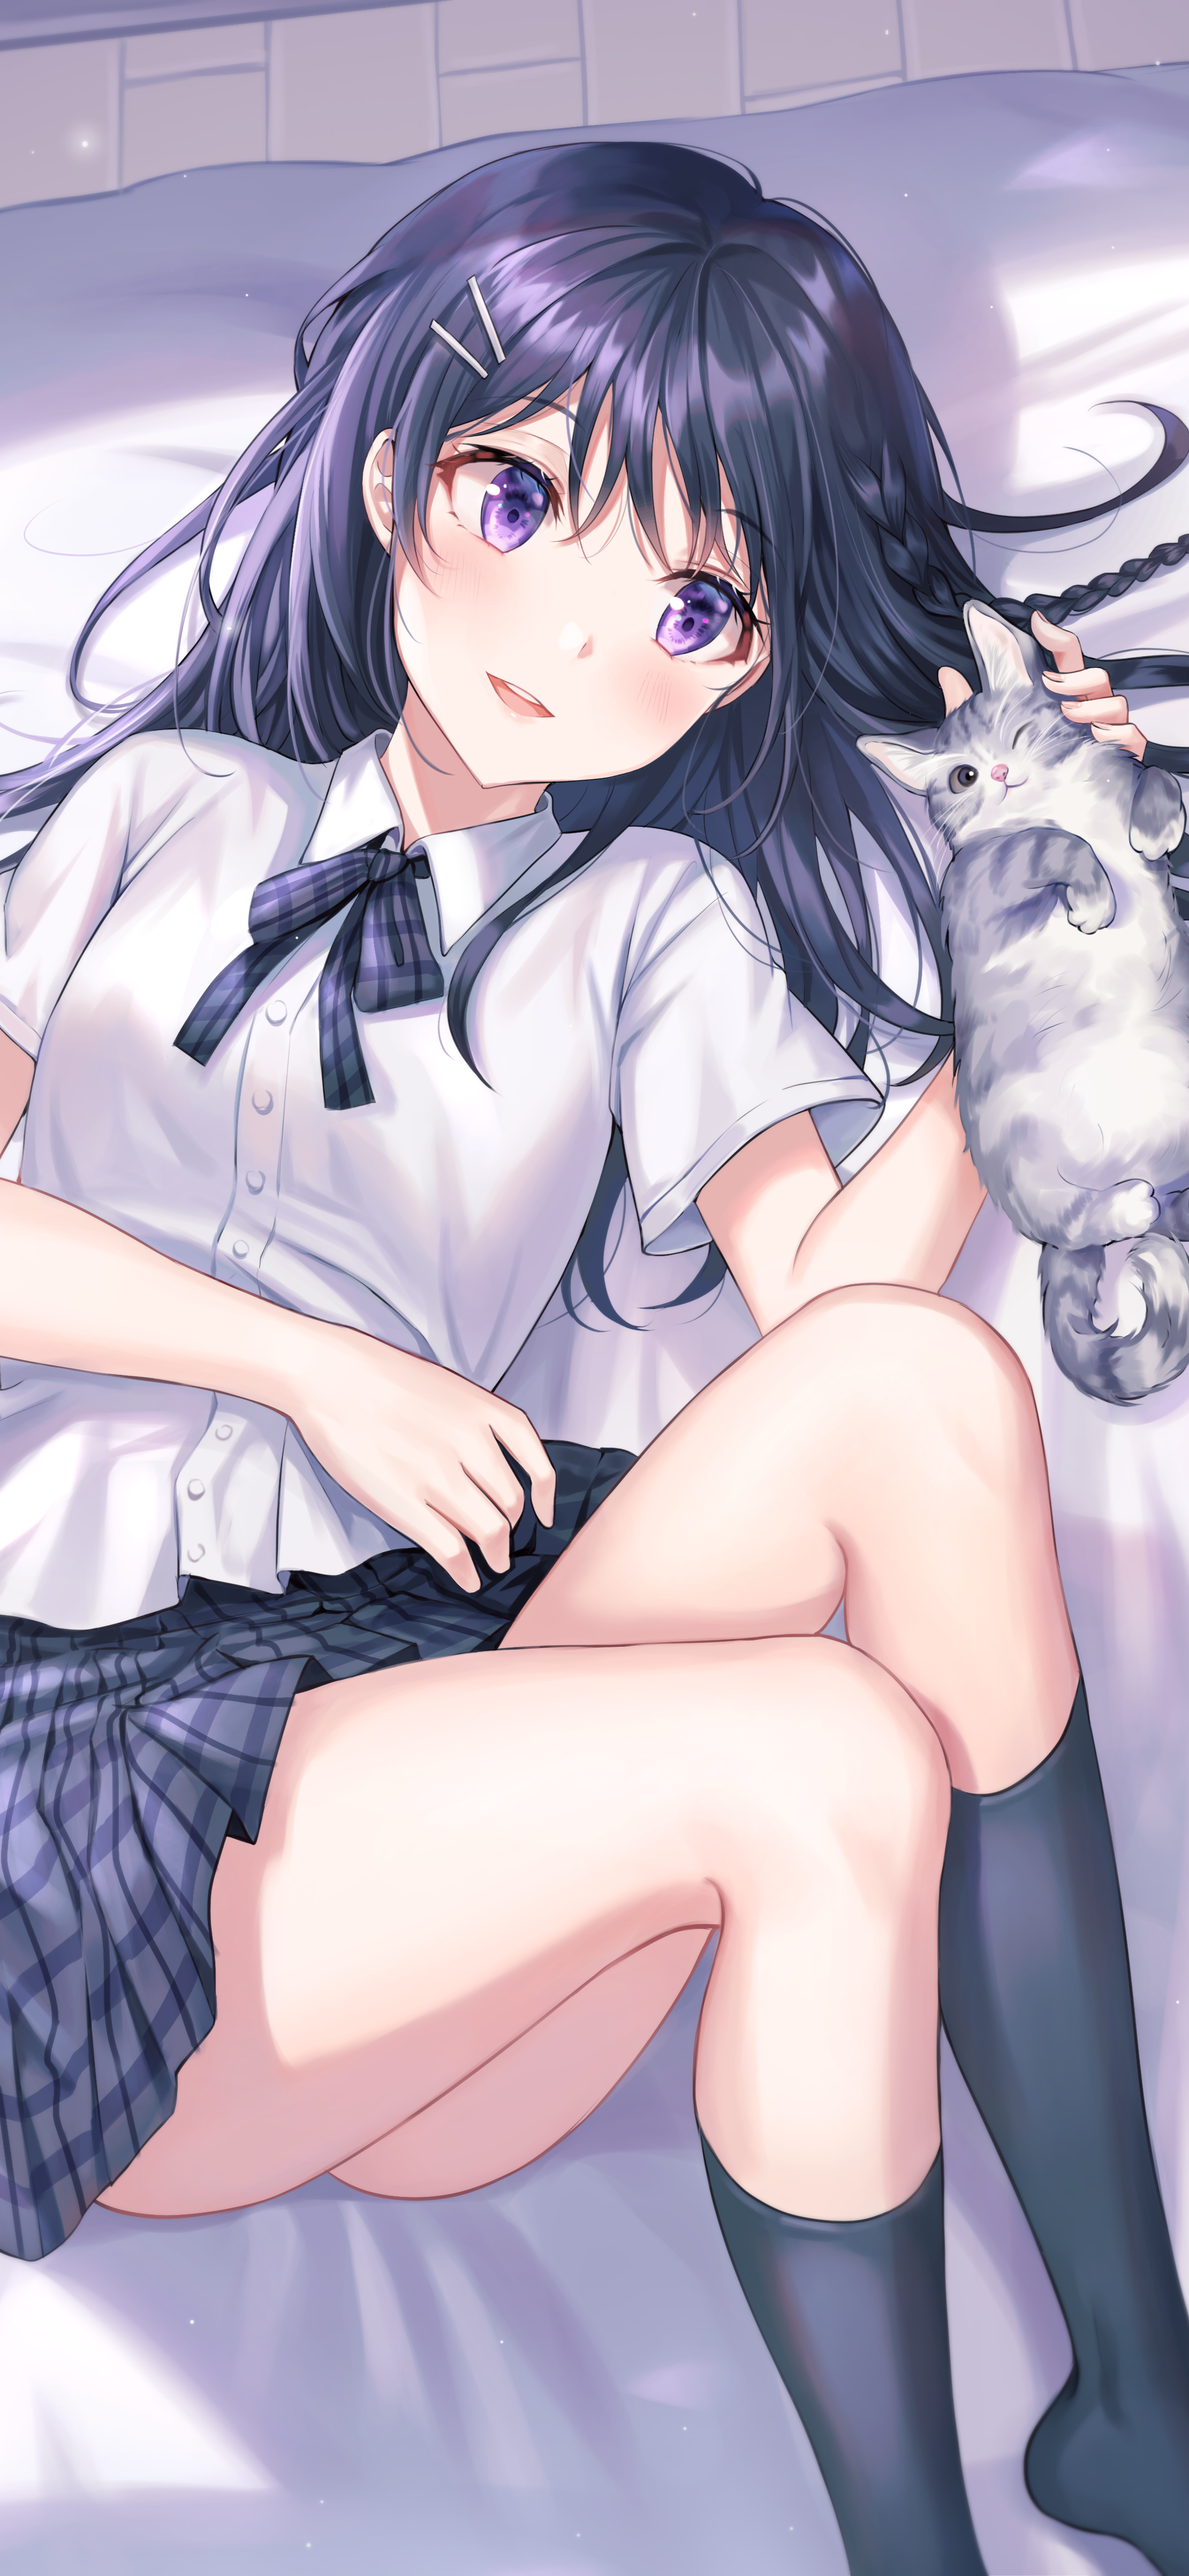 Anime 2221x4810 anime girls school uniform cats thighs anime artwork Tokkyu (artista) dark hair purple eyes